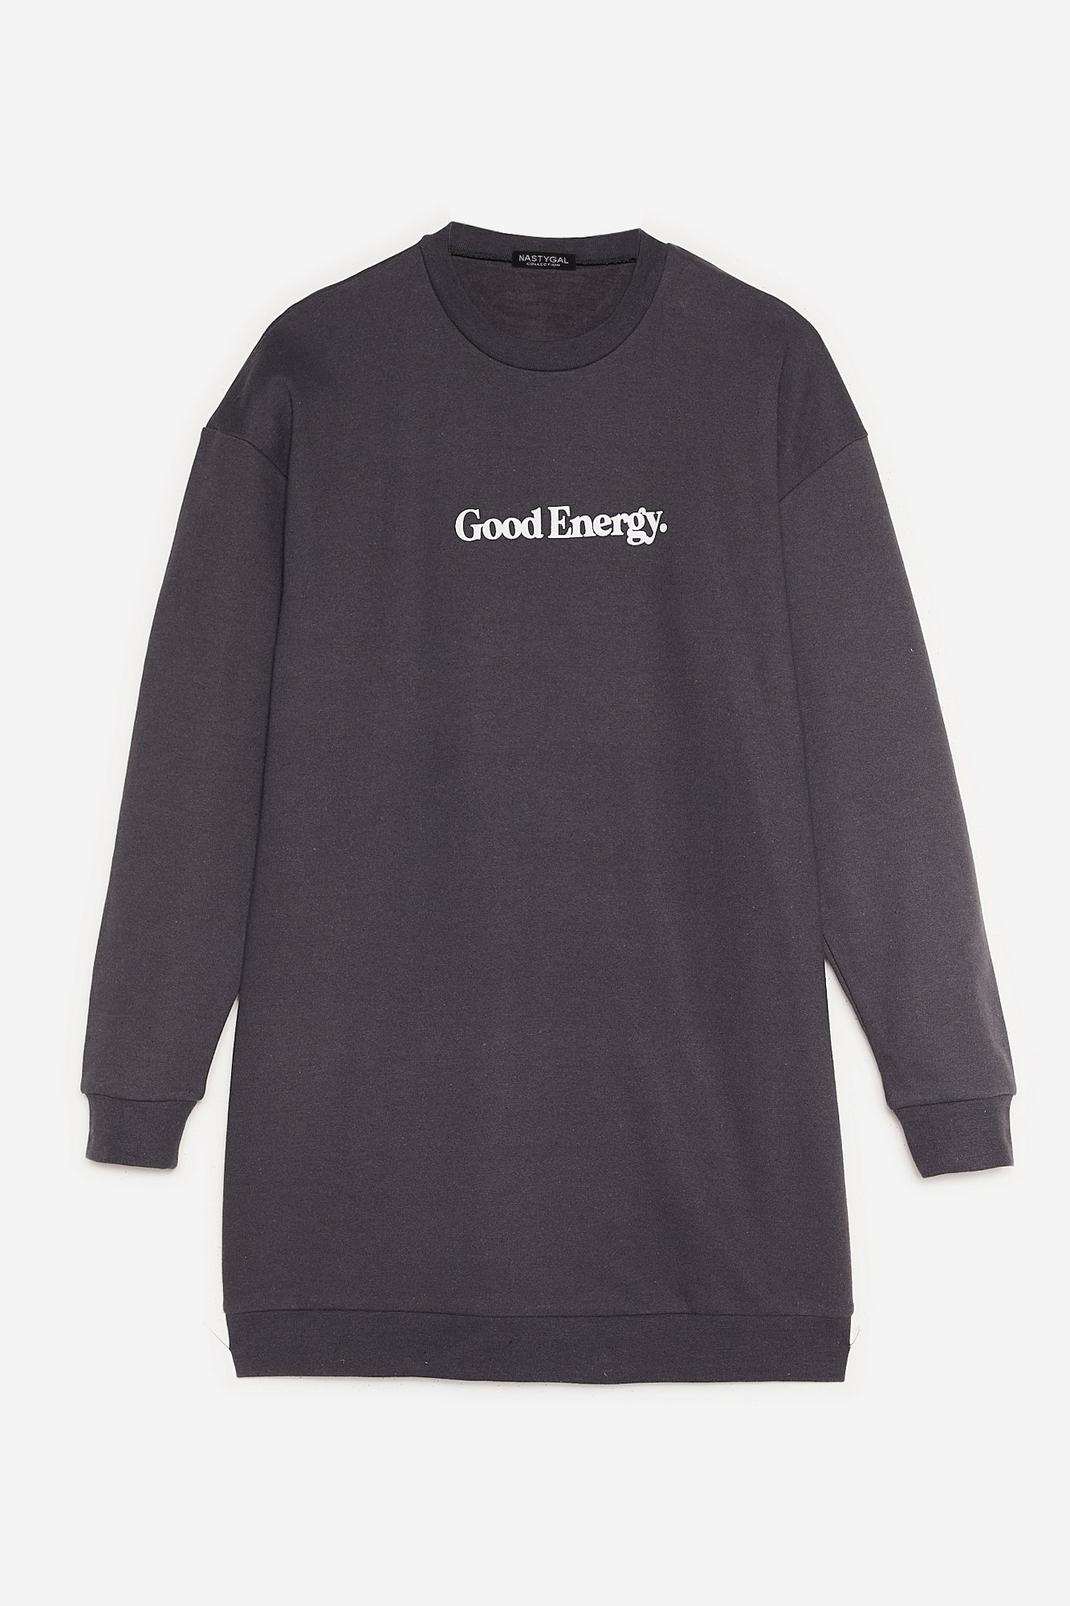 Charcoal Petite Good Energy Graphic Sweatshirt Dress image number 1